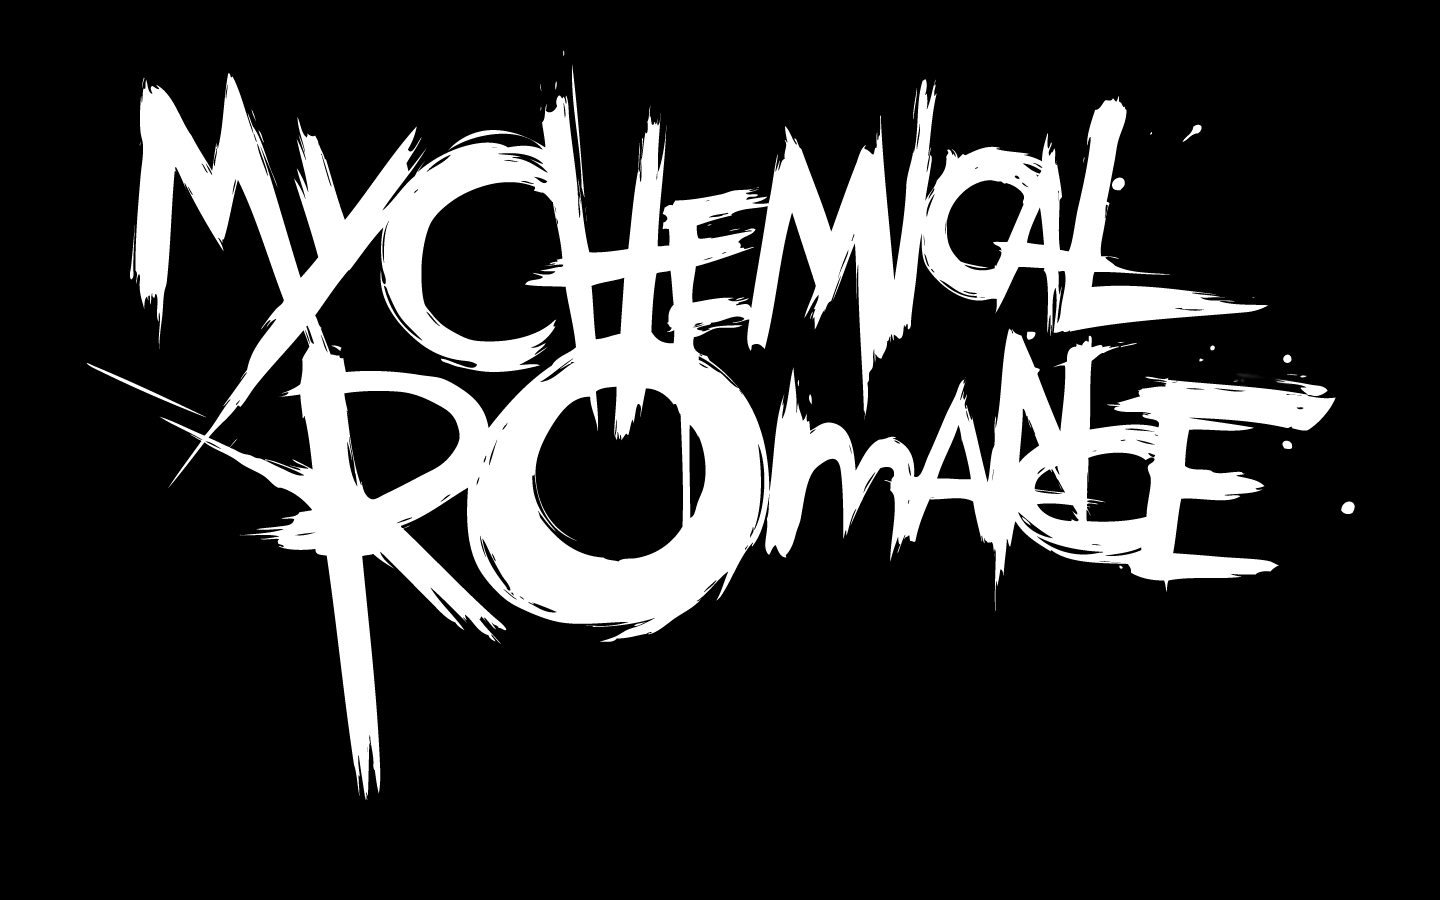 50 my chemical romance desktop wallpaper on wallpapersafari my chemical romance desktop wallpaper